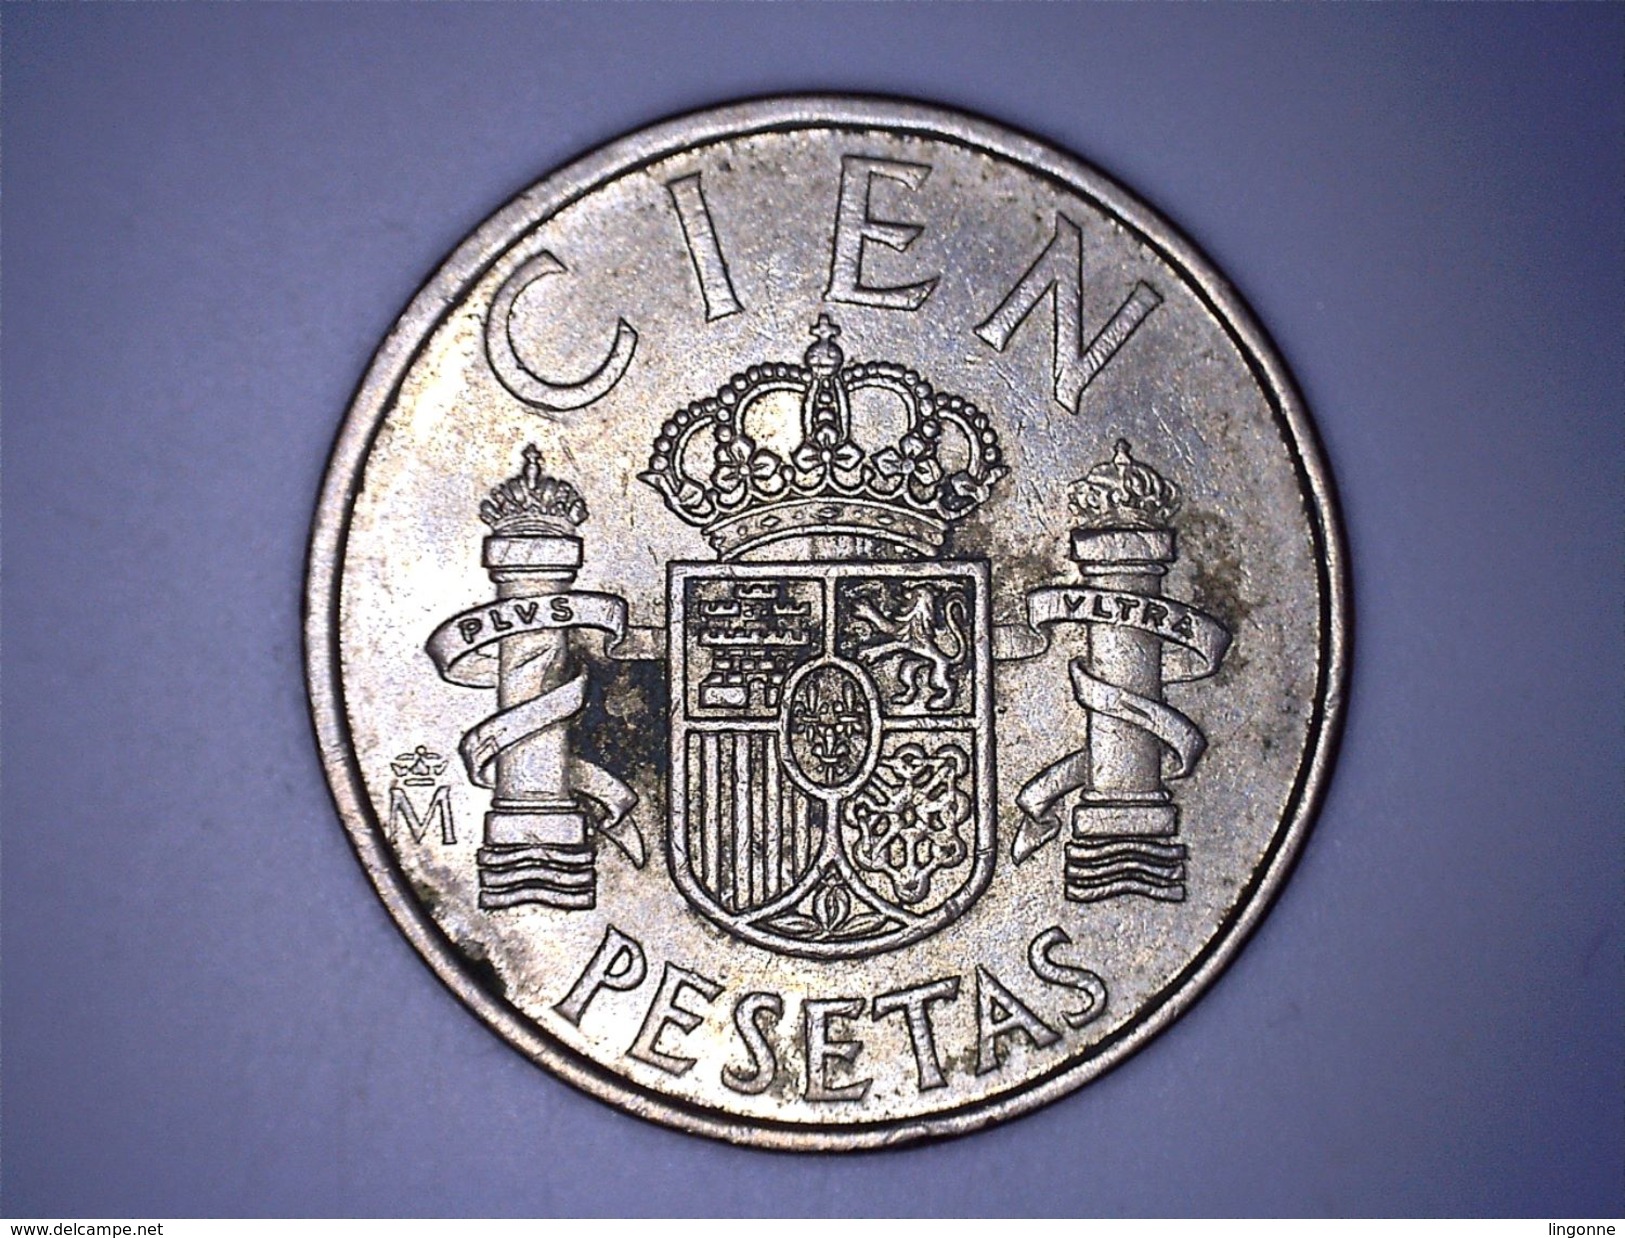 ESPAGNE / SPAIN 100 (CIEN) PESETAS 1983 - 100 Peseta